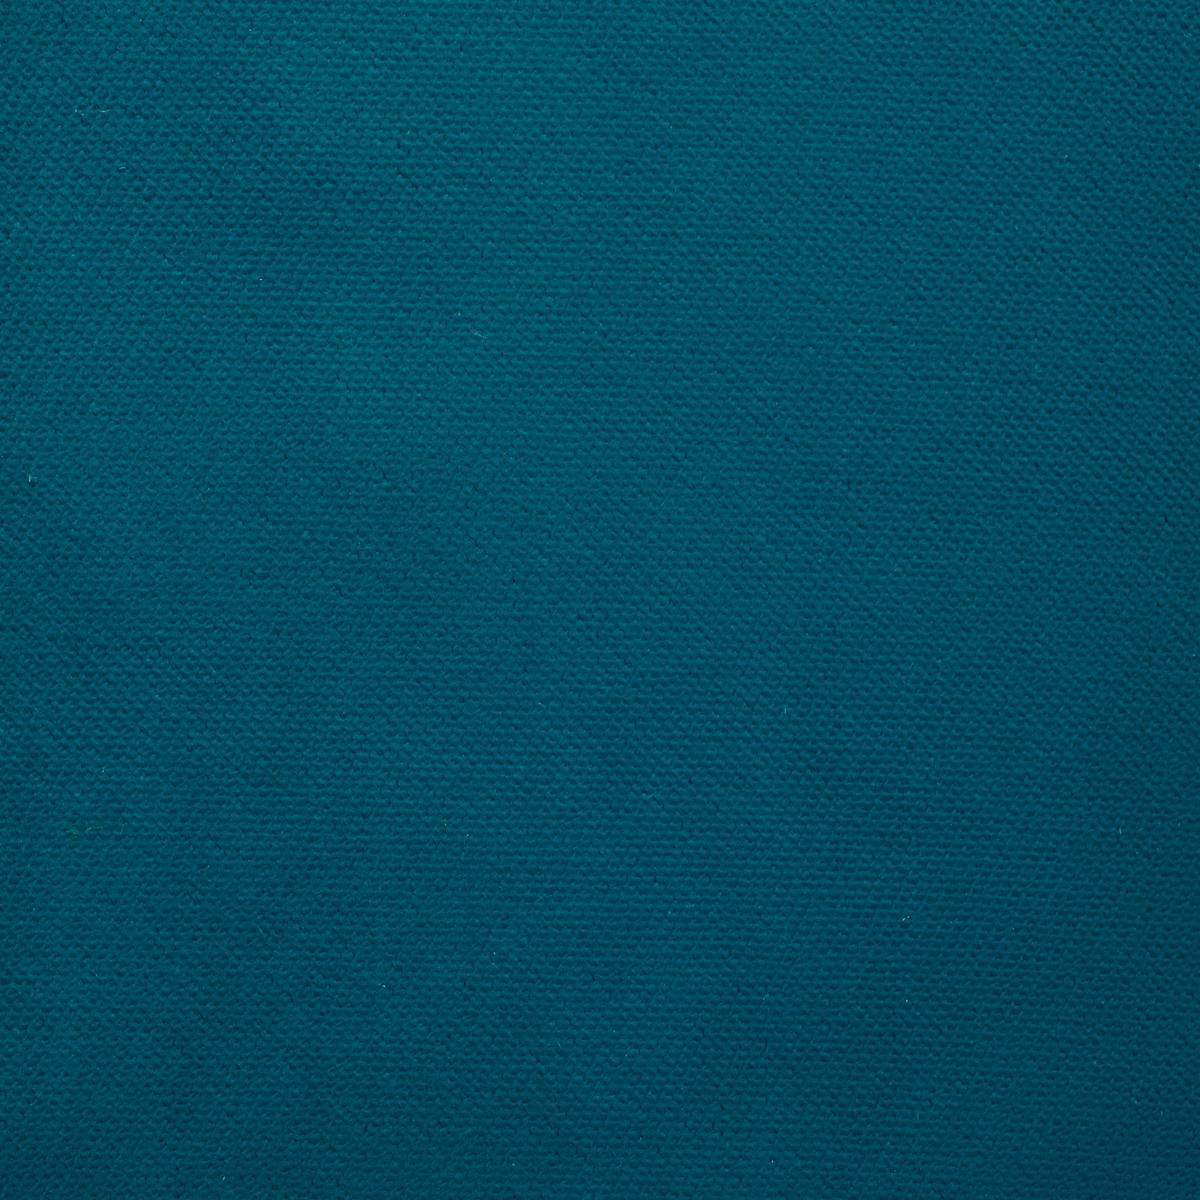 Villus Marine Fabric by Harlequin